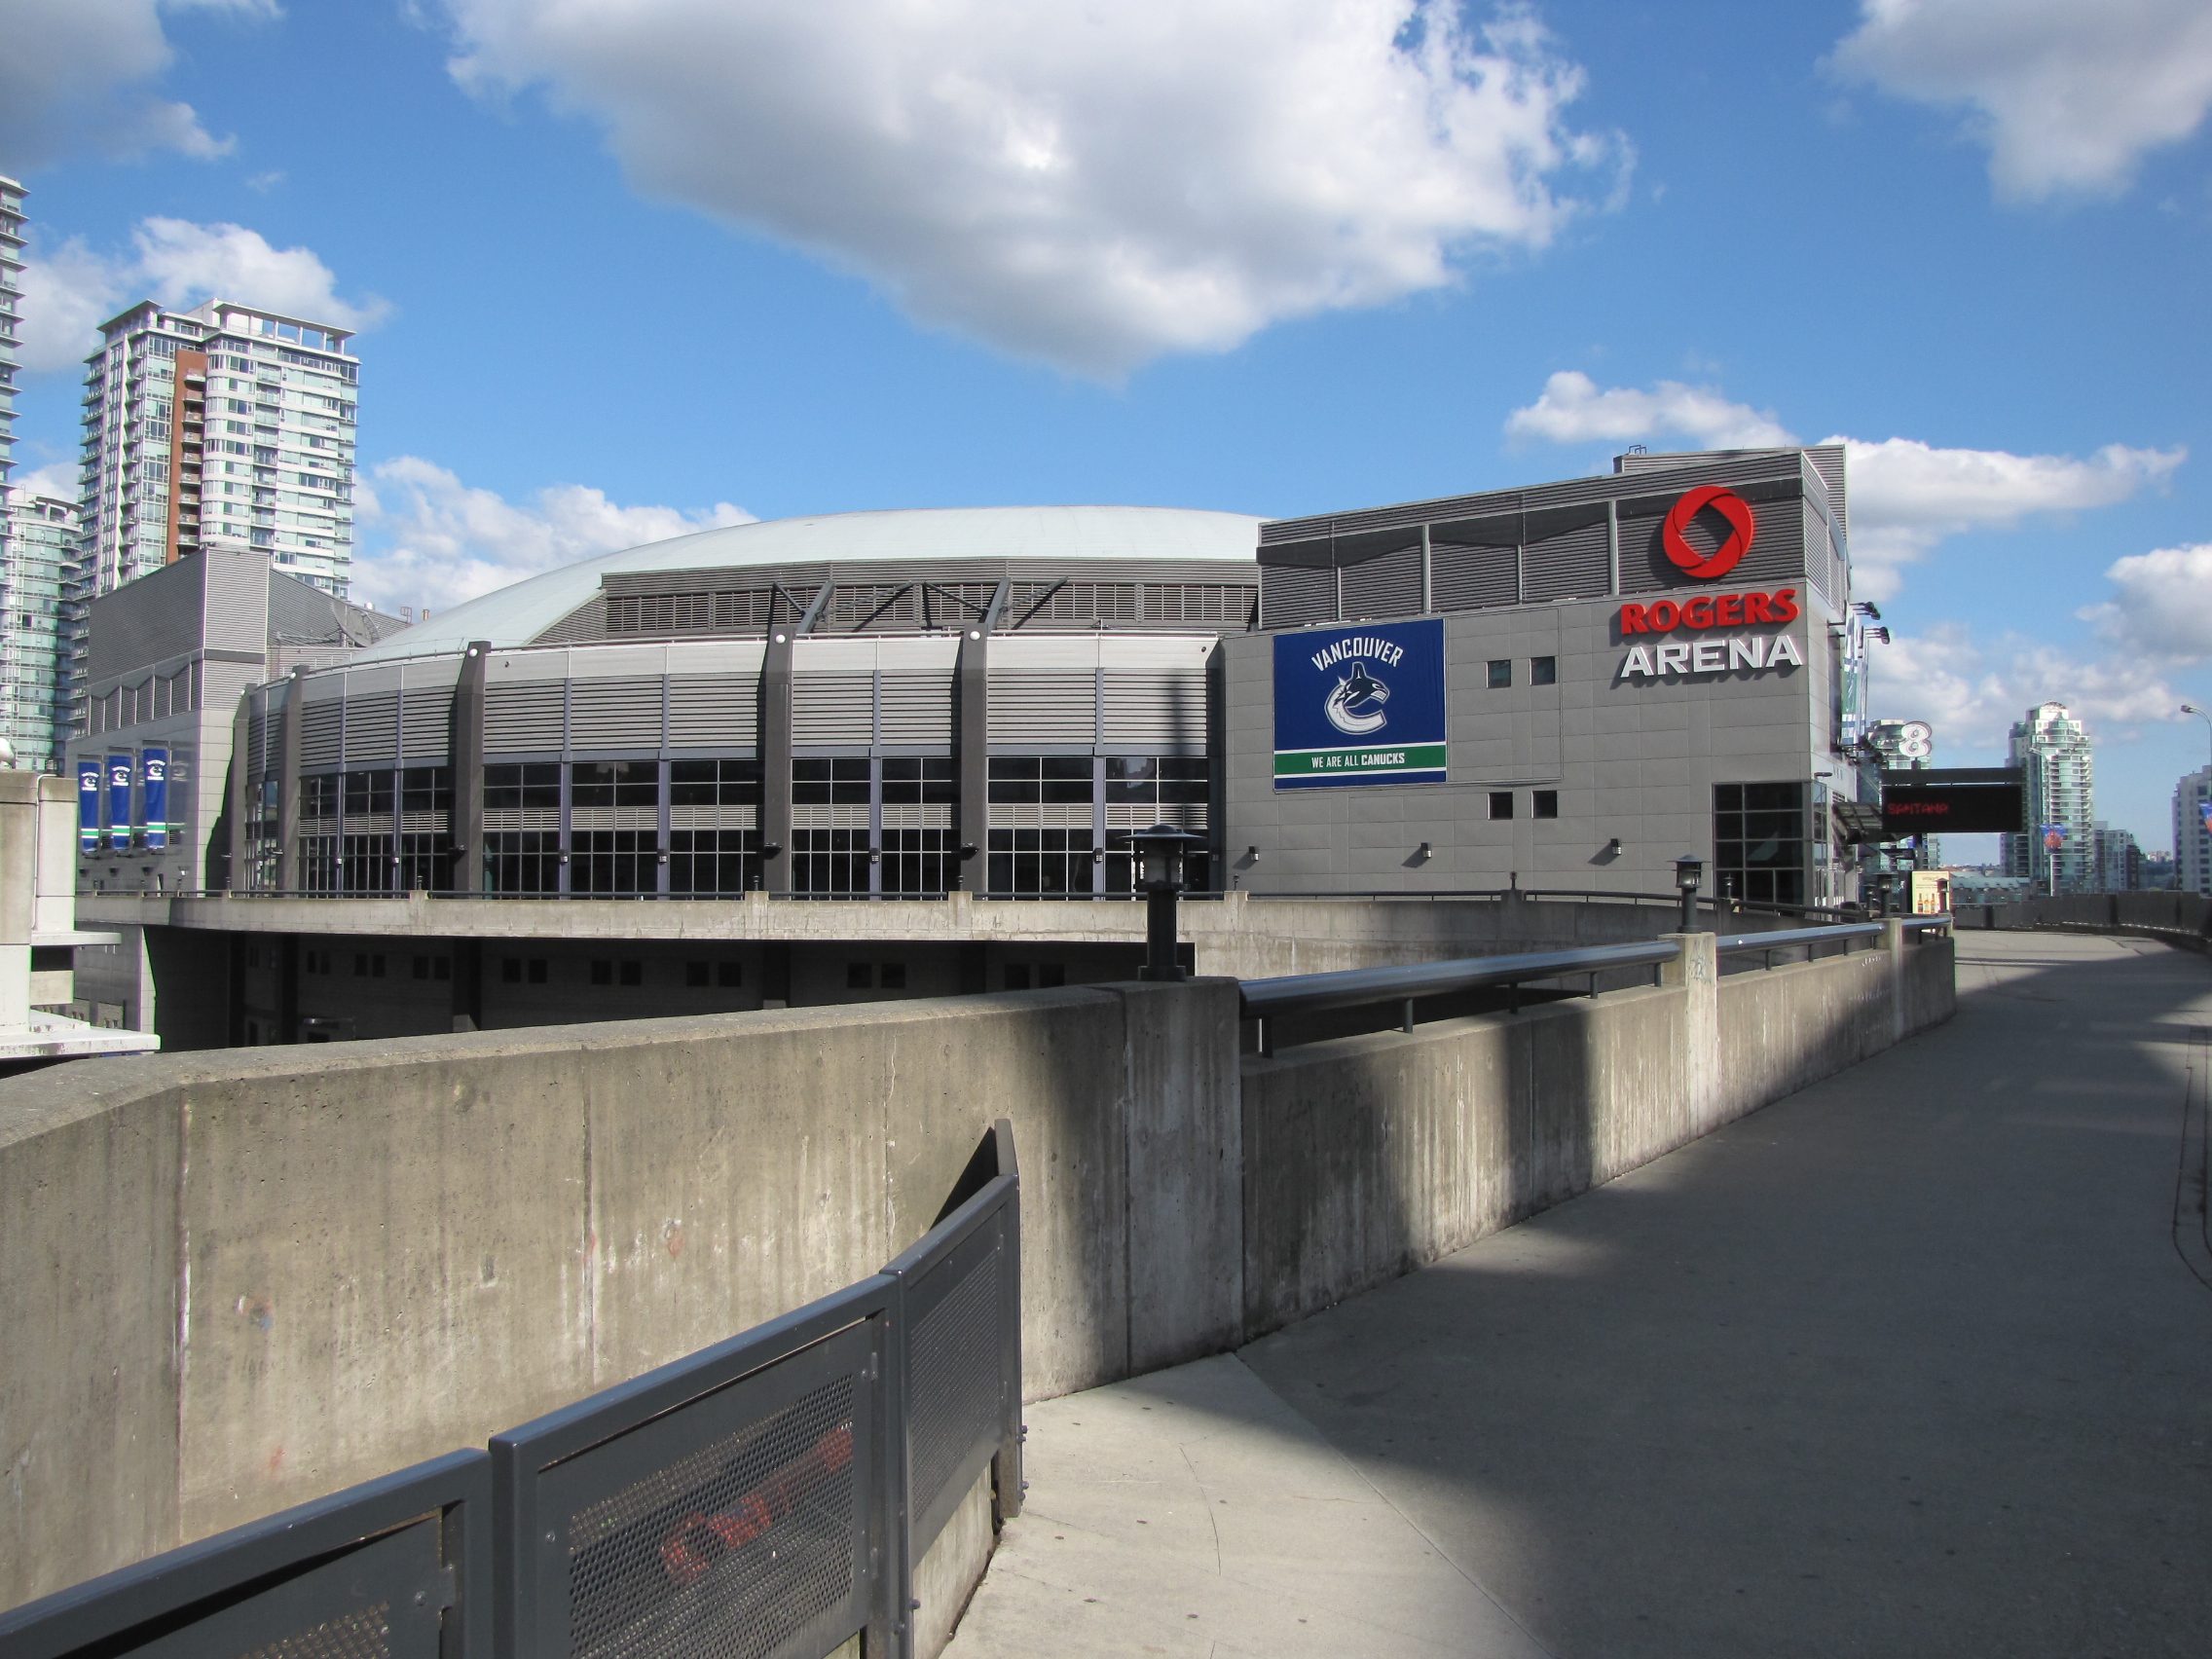 Vancouver Canucks vs Dallas Stars in der Rogers Arena Tickets